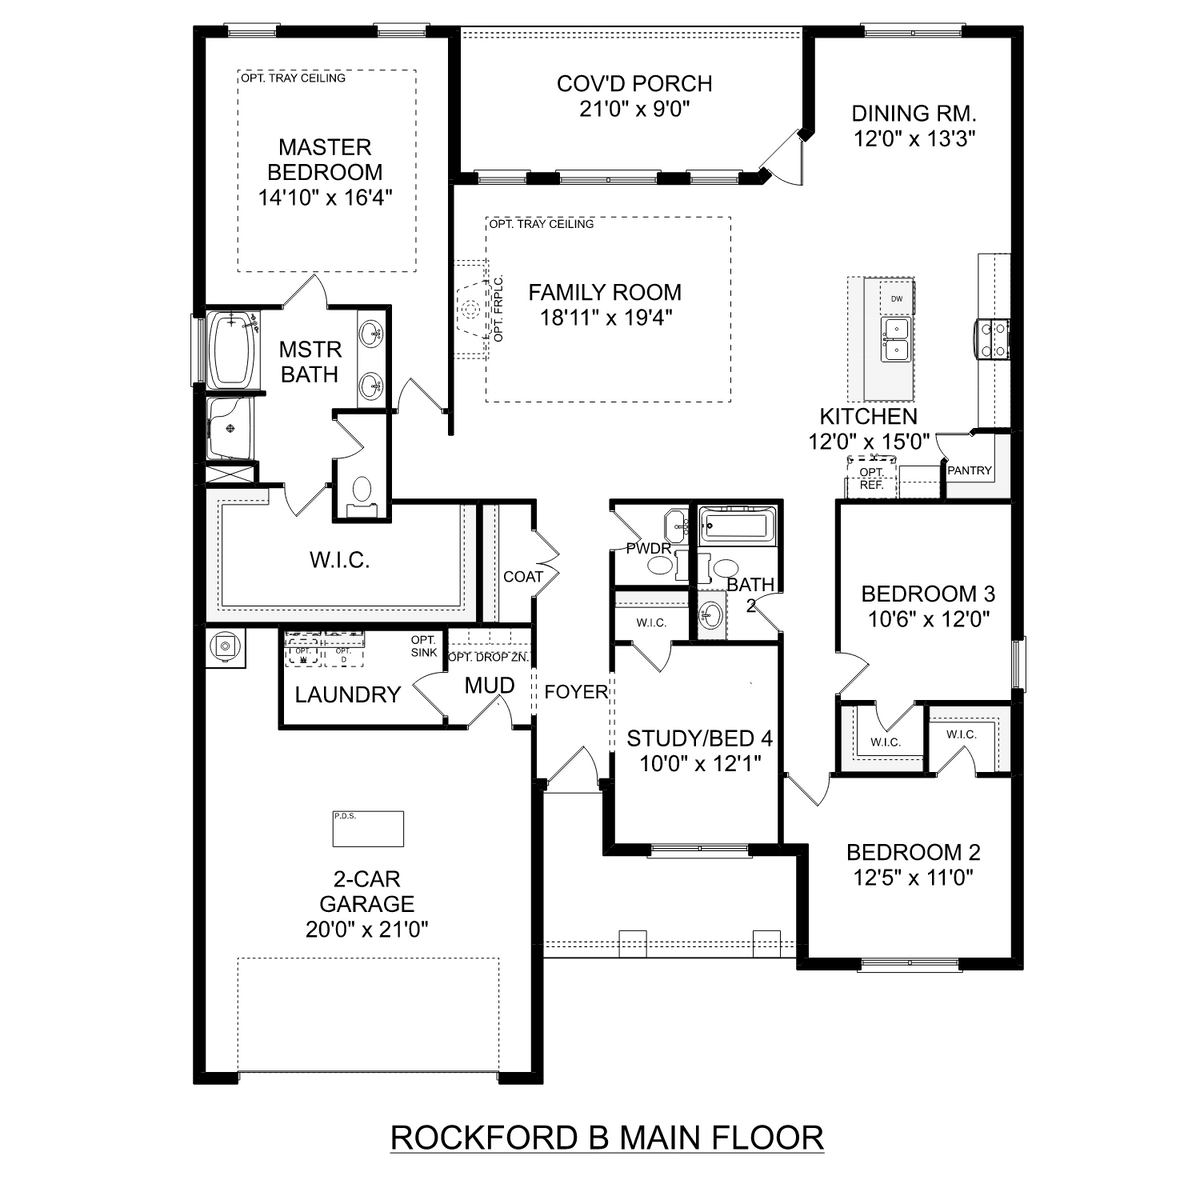 1 - The Rockford B floor plan layout for 2116 Brandon Drive in Davidson Homes' North Ridge community.